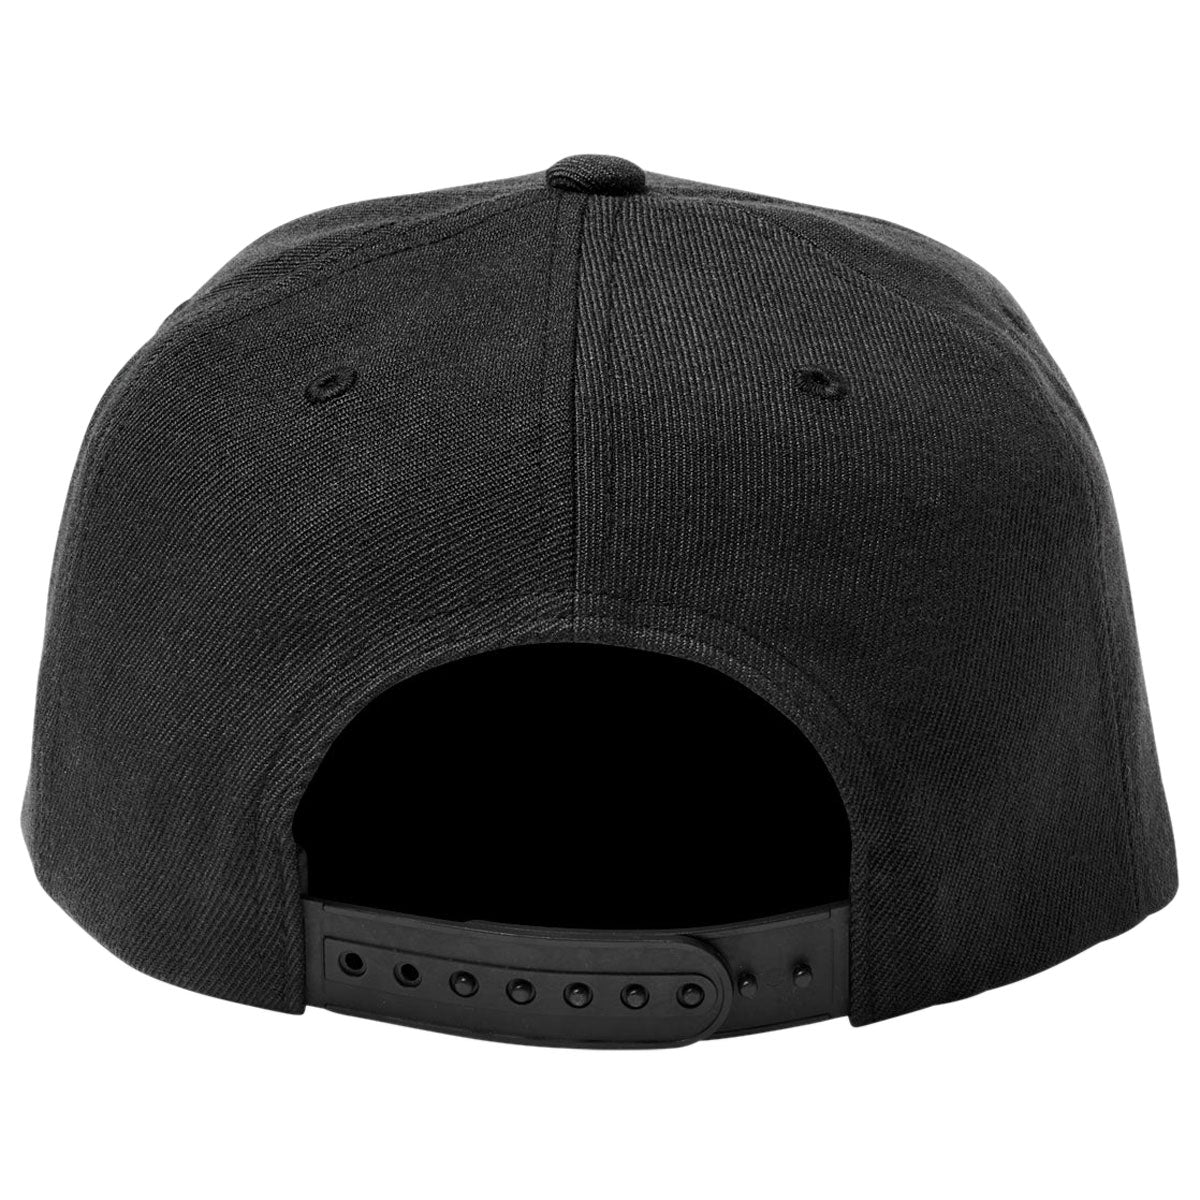 Brixton Alpha Square Mp Snapback Hat - Black/Black image 2